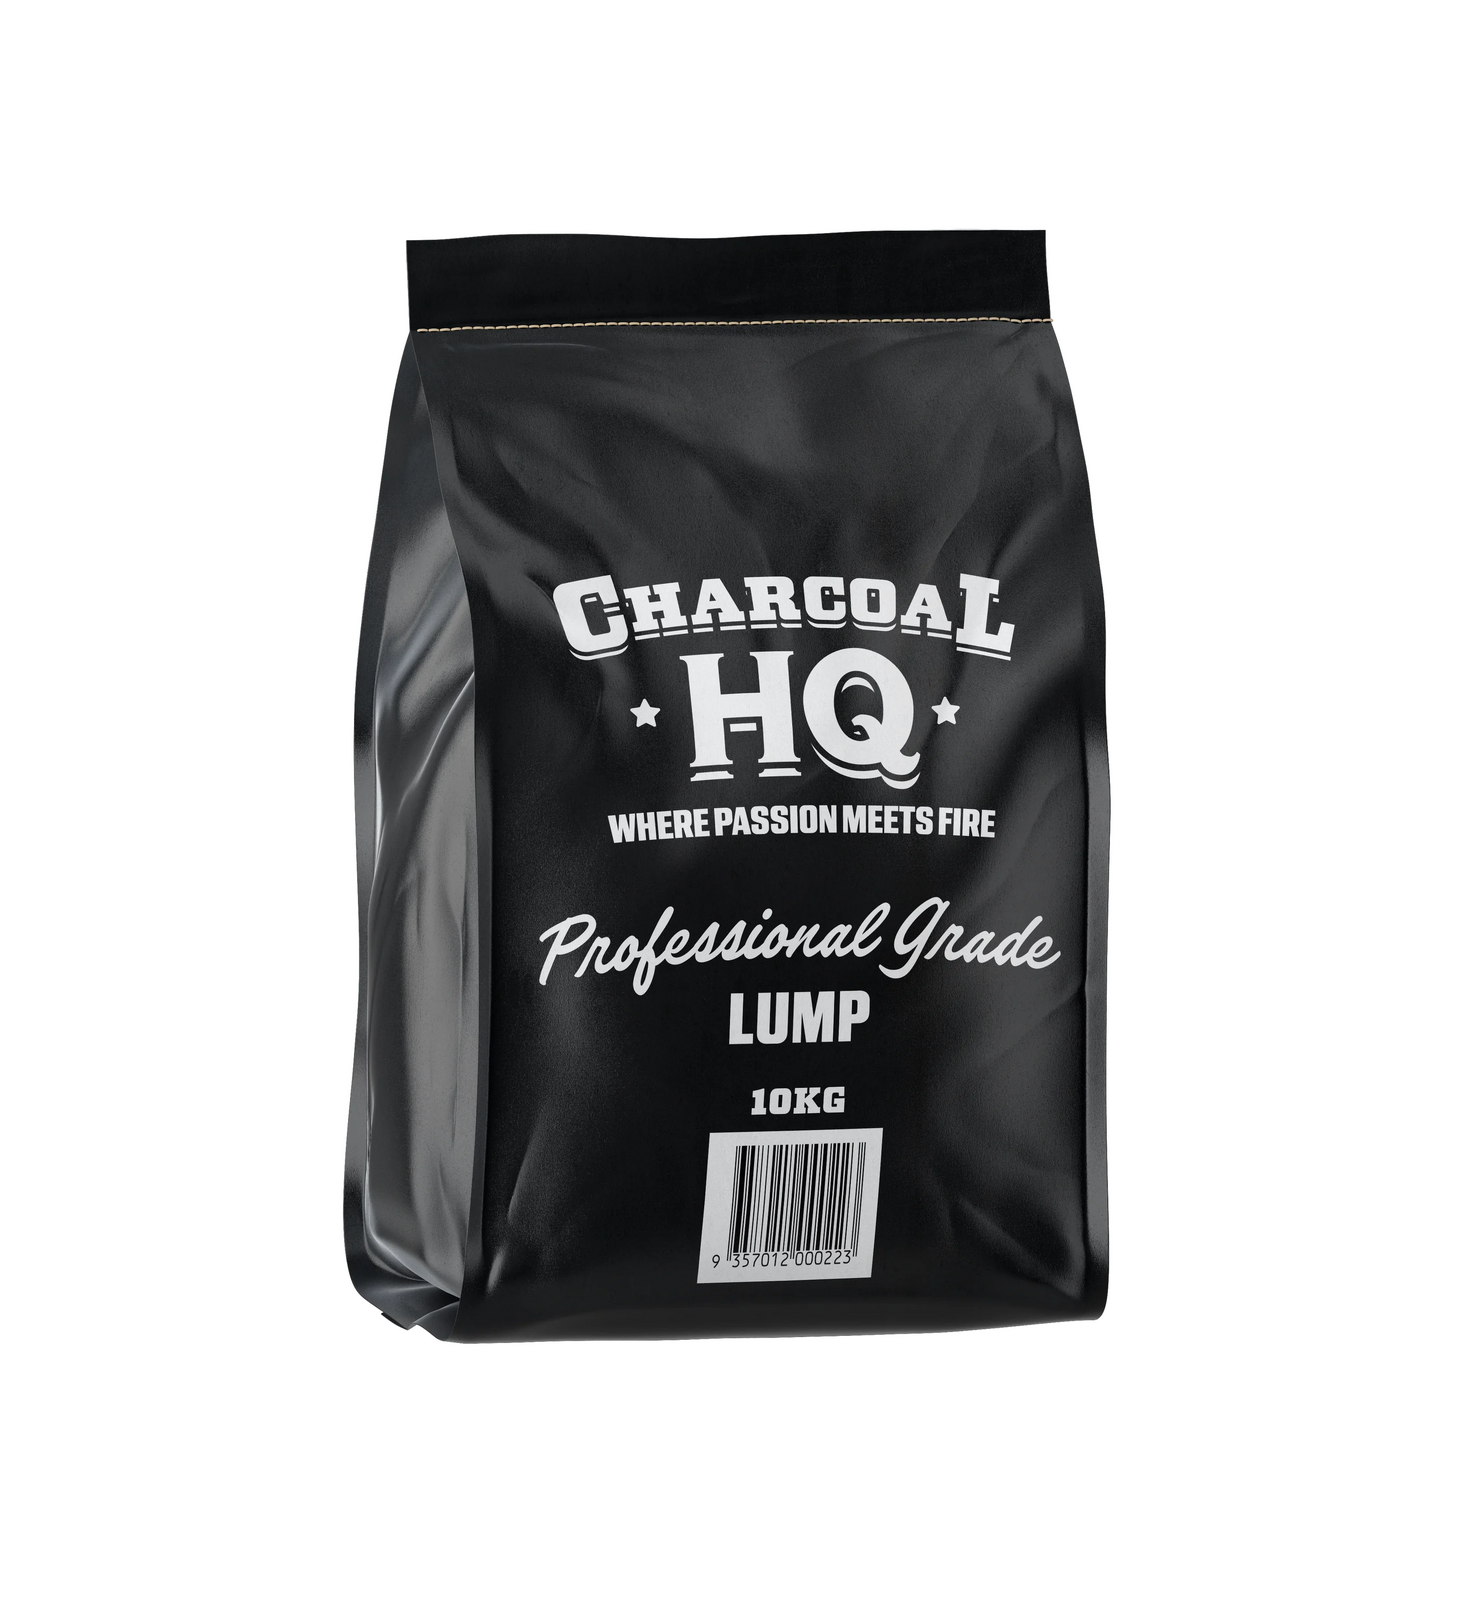 Charcoal HQ - Professional Grade Lump (10kg) - PG-10KG